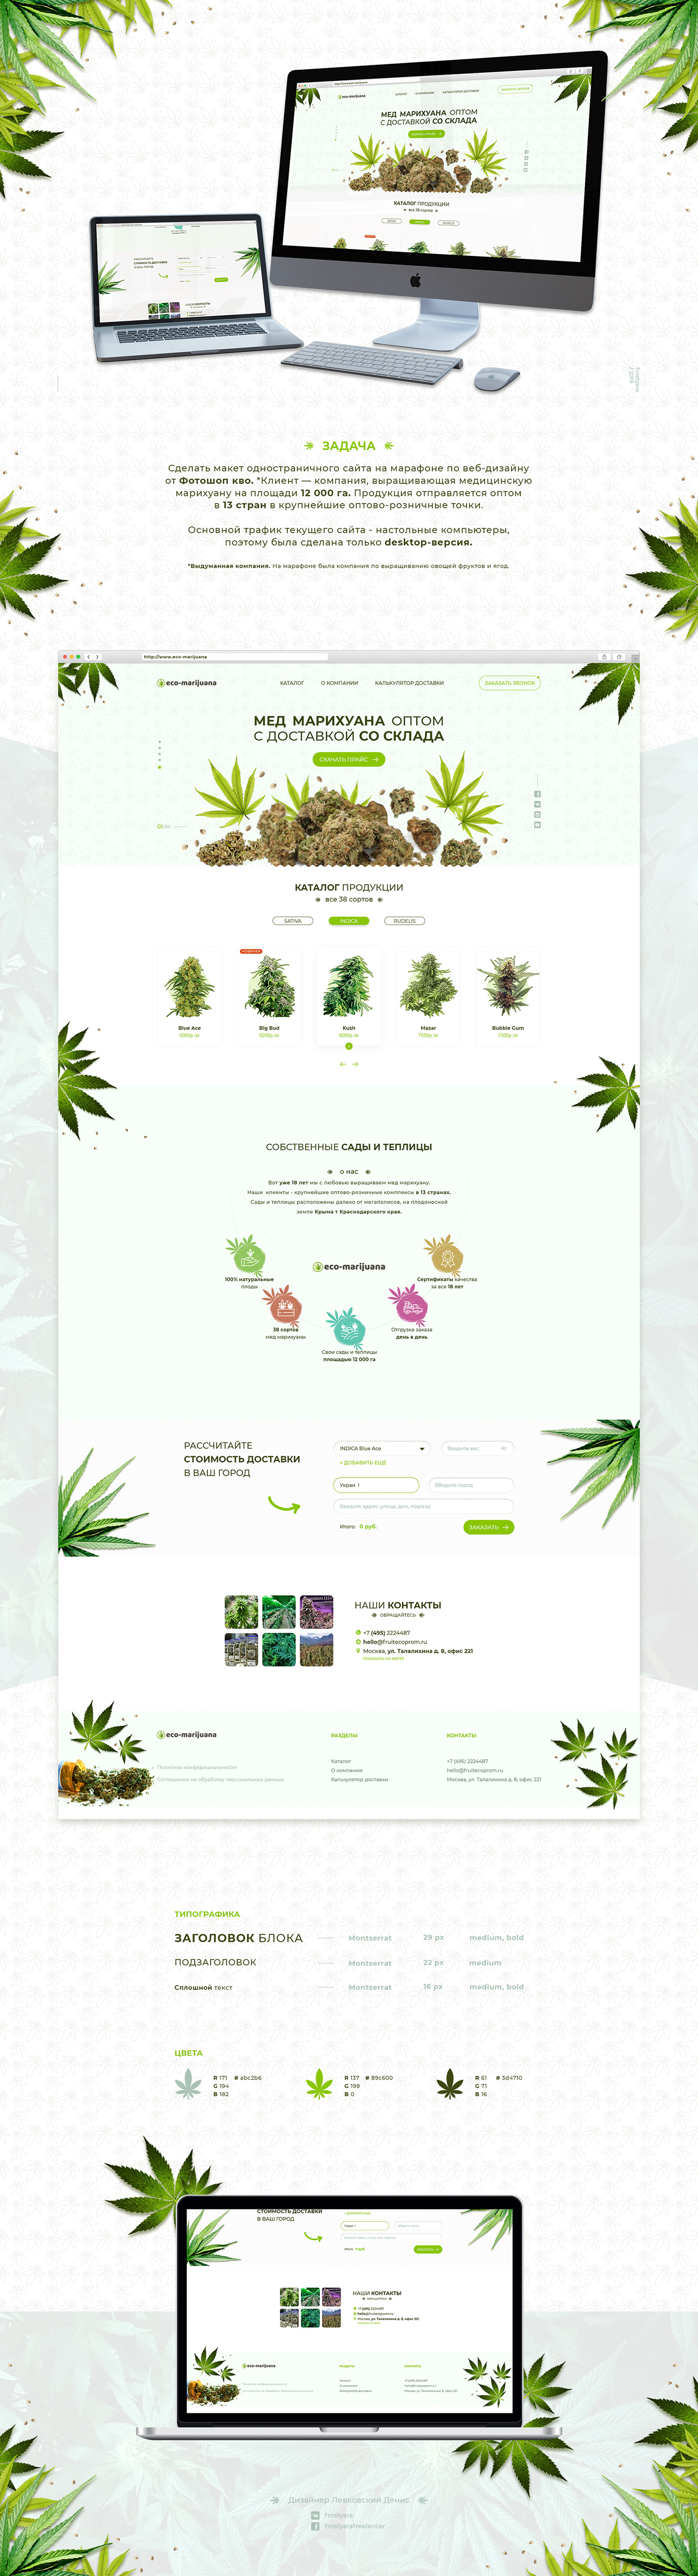 Web design marijuana cannabis landing